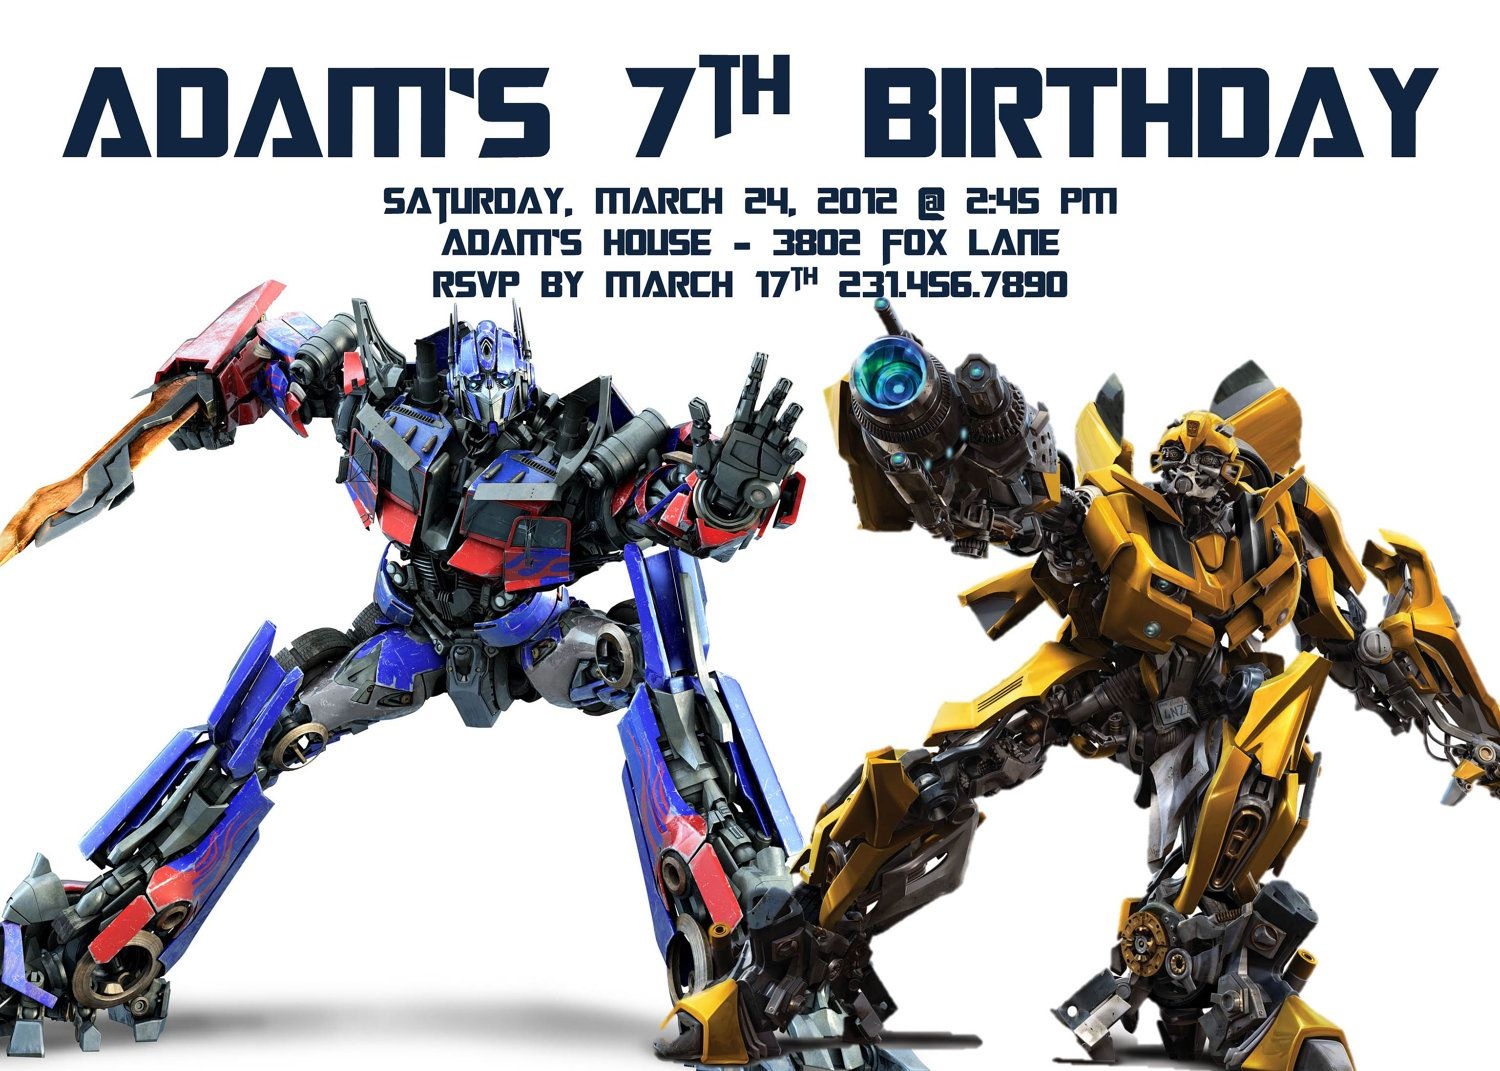 Transformers Birthday Invitation Template | Party - Alistairs 5Th - Transformers Party Invitations Free Printable